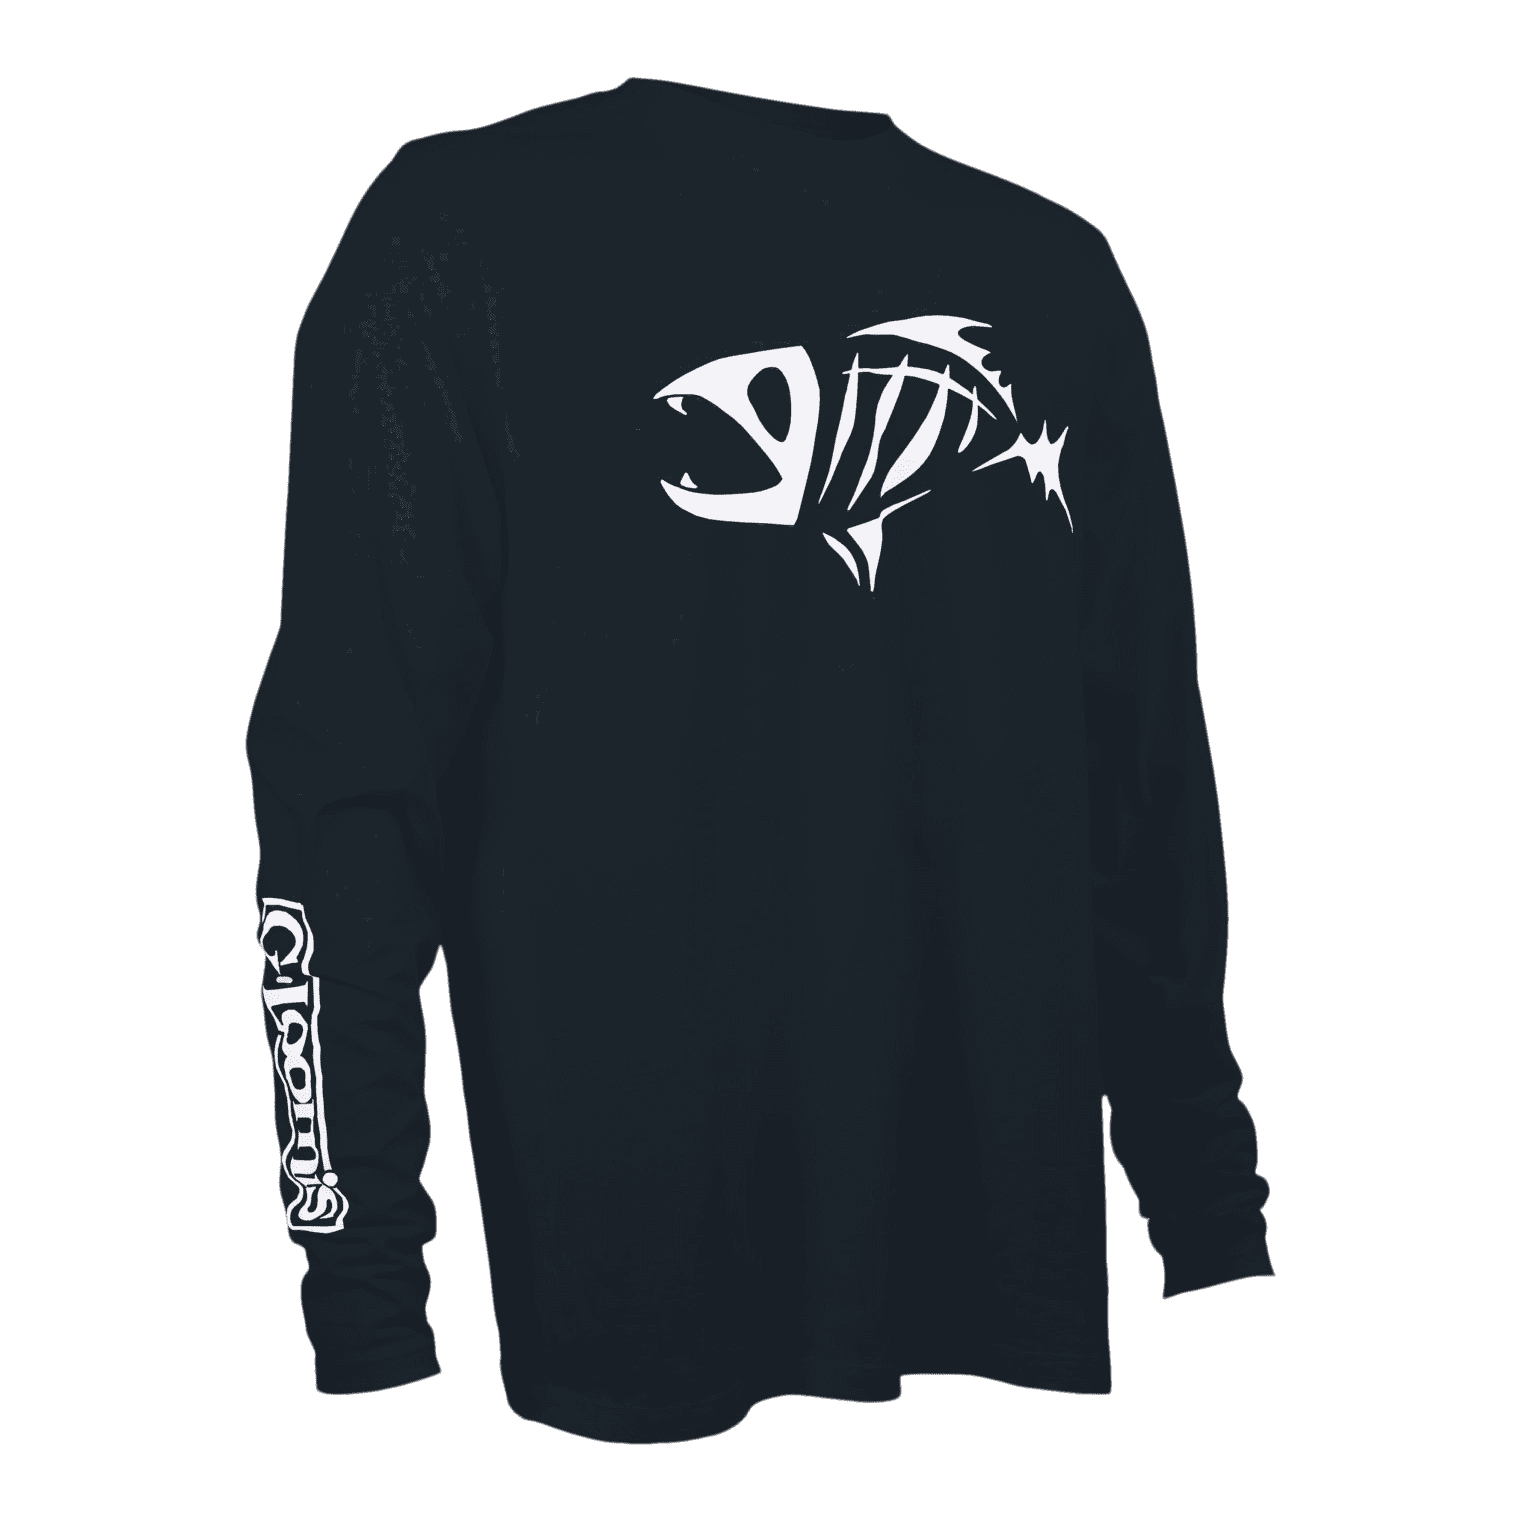 Fishouflage Crappie Camo Fishing Shirt – Riptide Short Sleeve Performance  Shirt for Men (XL)